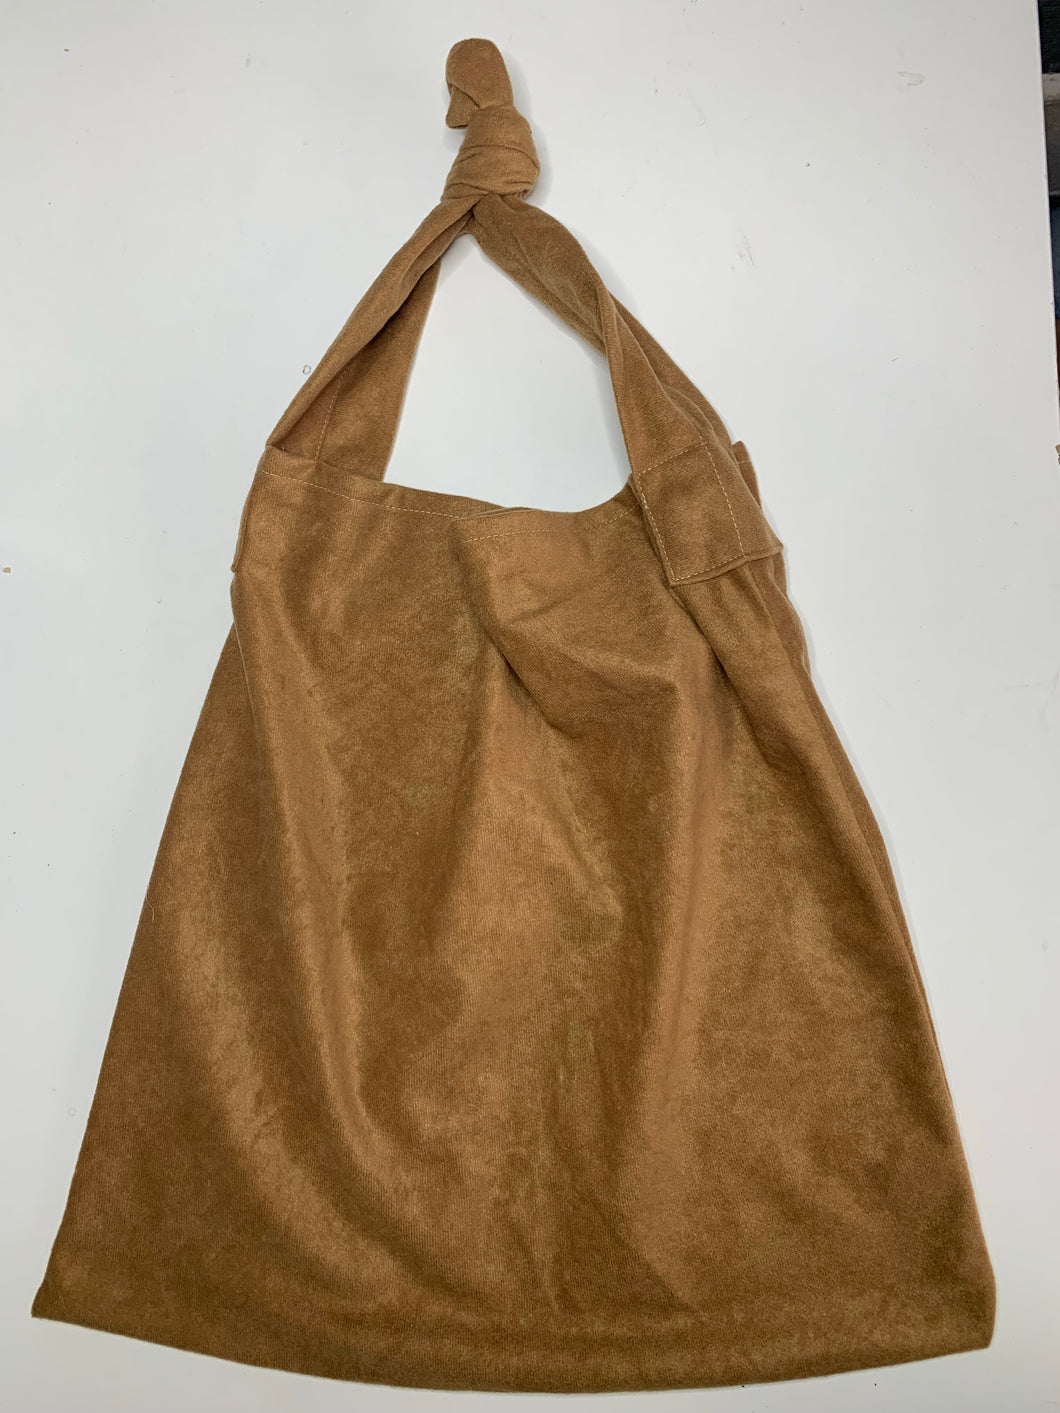 Small beige handy bag